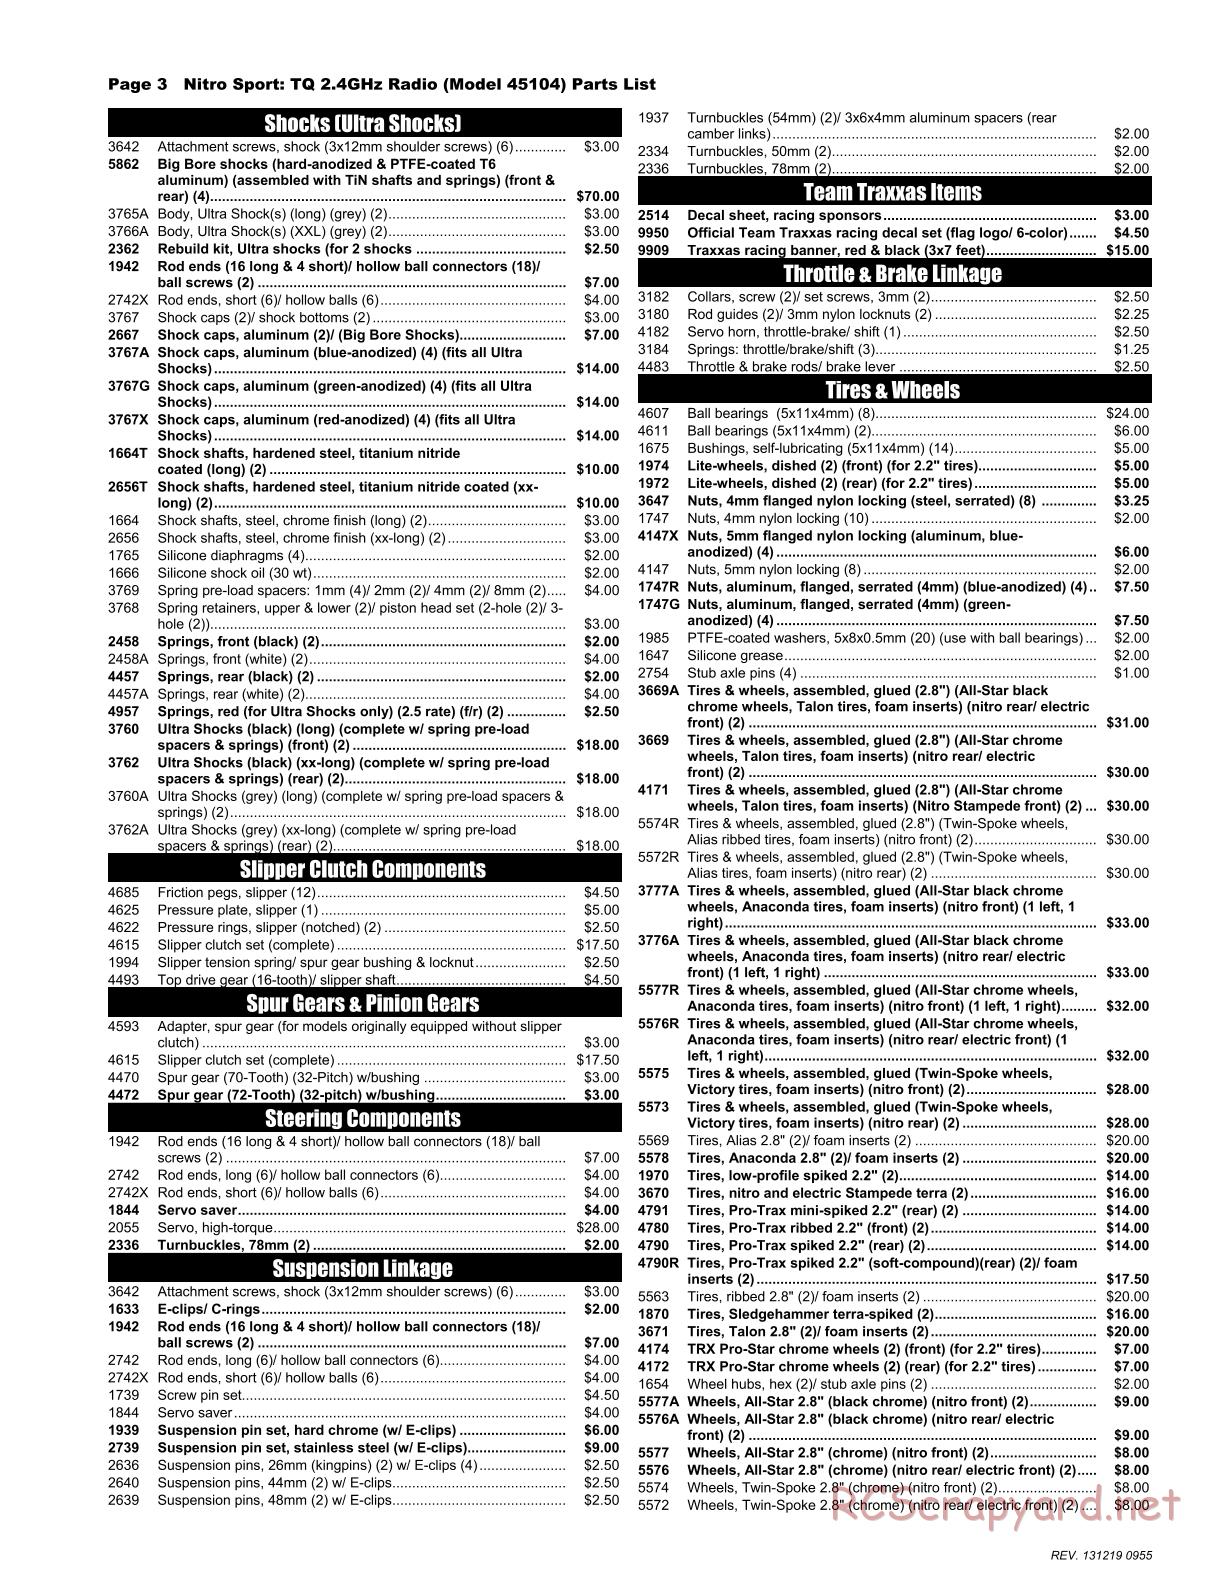 Traxxas - Nitro Sport (2013) - Parts List - Page 3